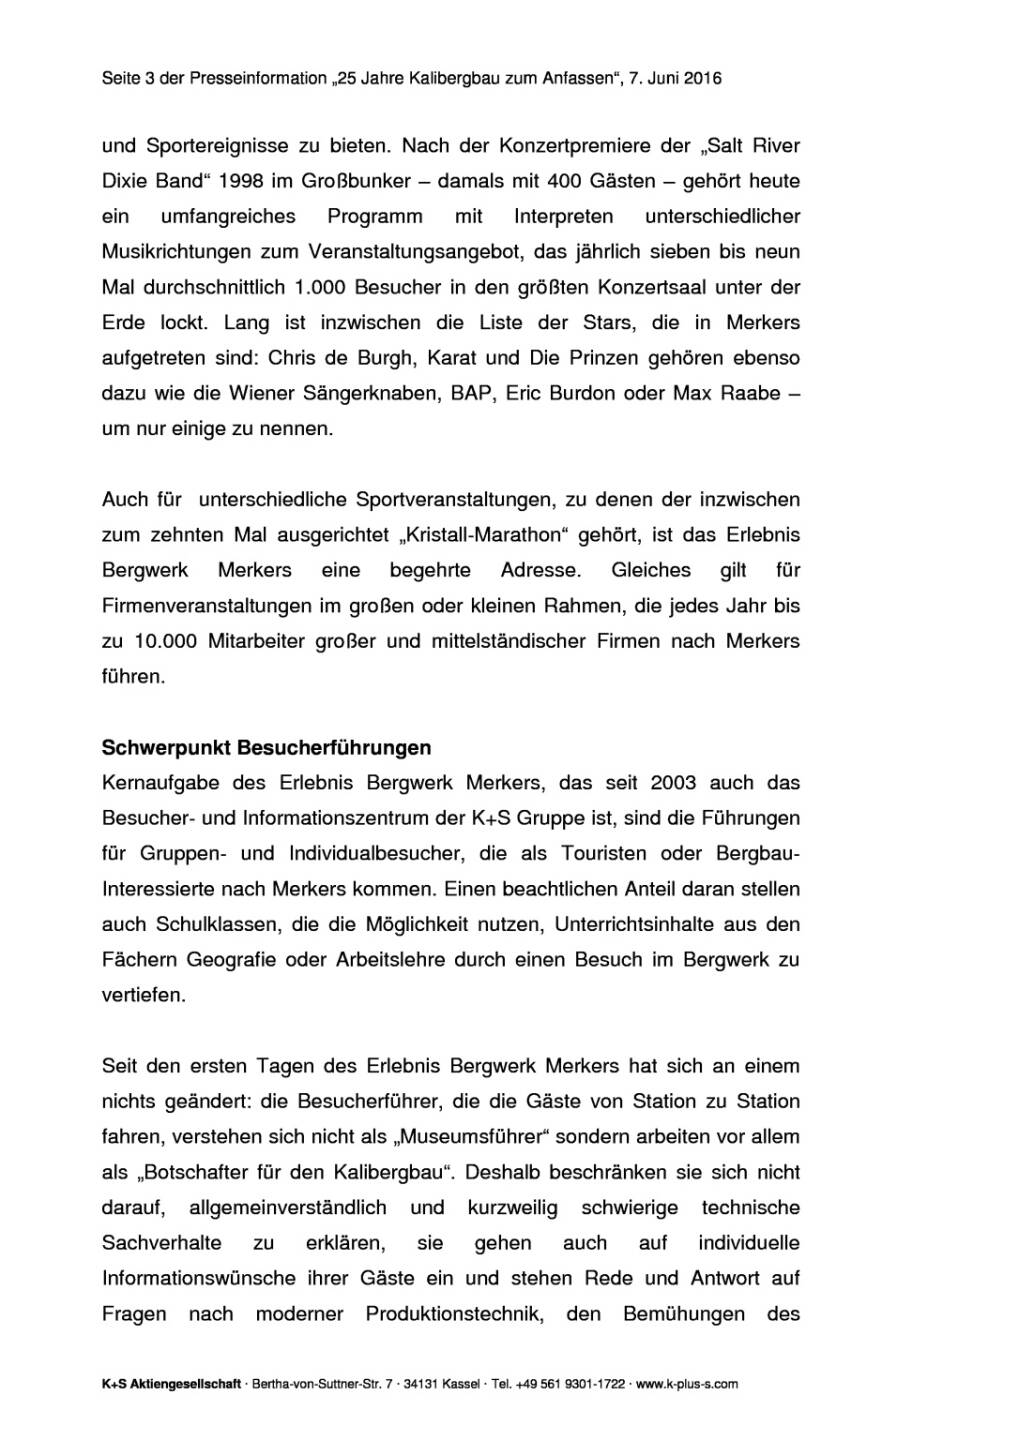 K+S AG: 25 Jahre Kalibergbau zum Anfassen, Seite 3/4, komplettes Dokument unter http://boerse-social.com/static/uploads/file_1179_ks_ag_25_jahre_kalibergbau_zum_anfassen.pdf